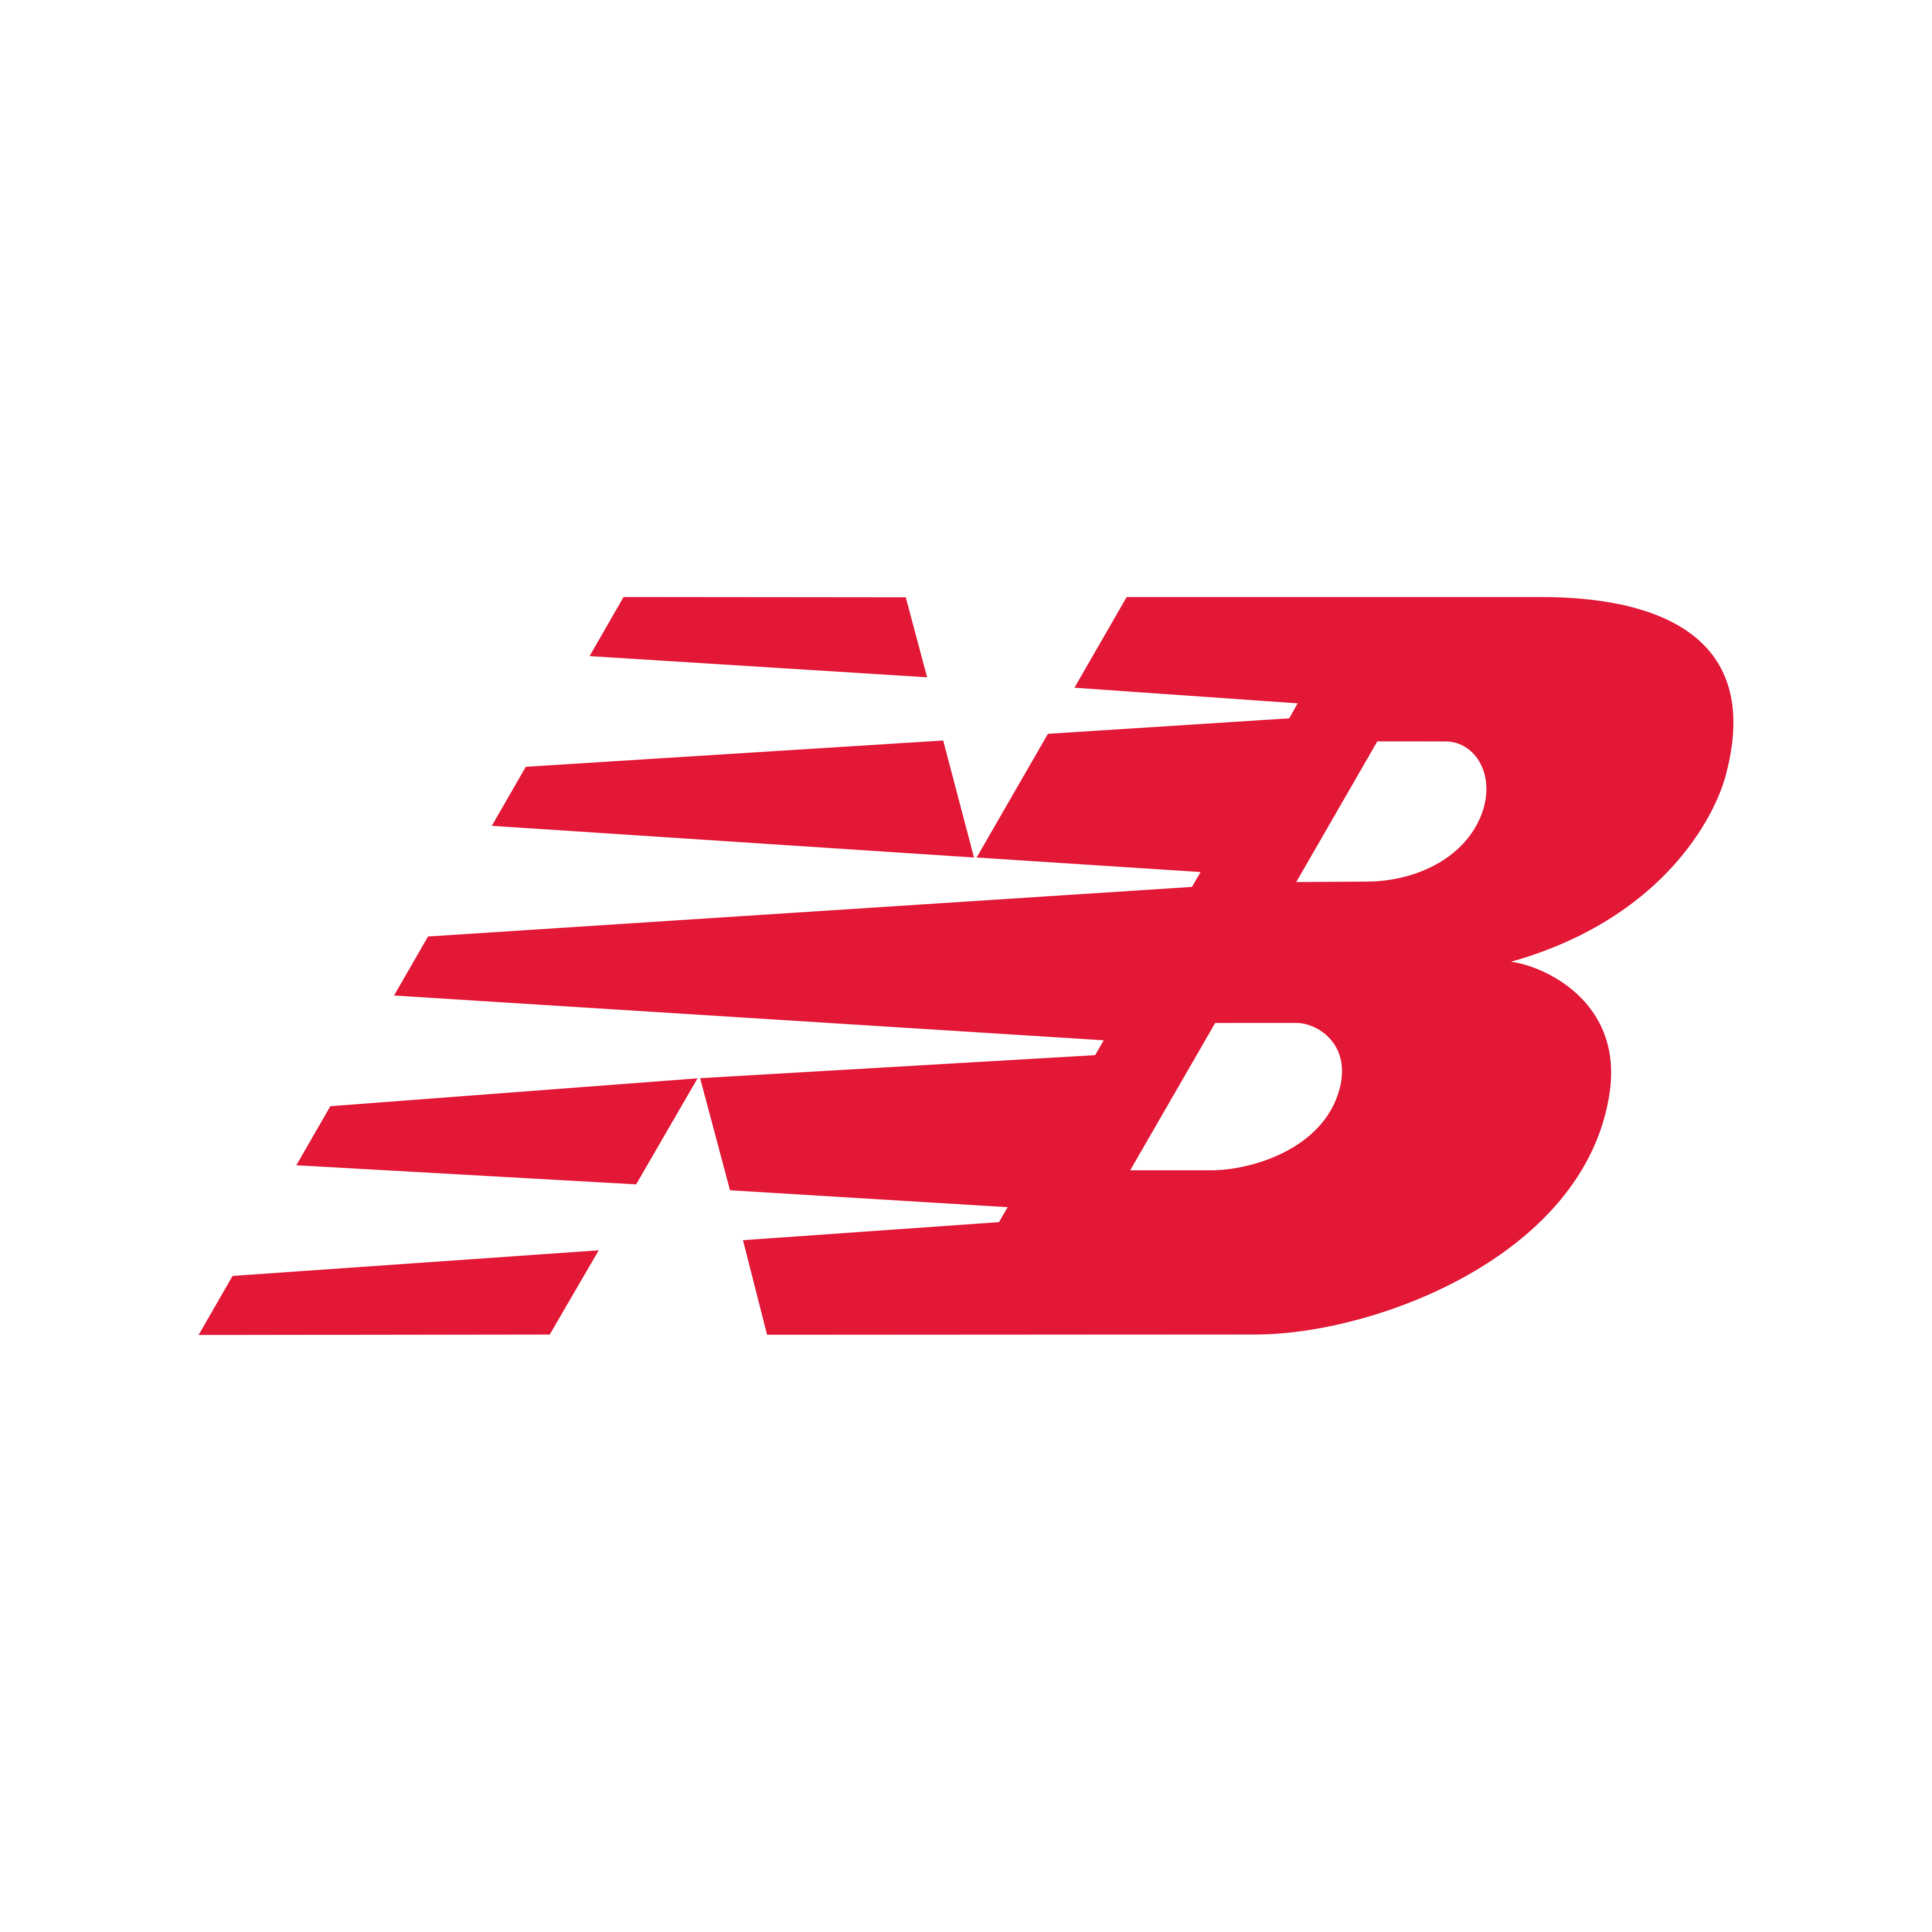 Logo New Balance Brand Shoe T